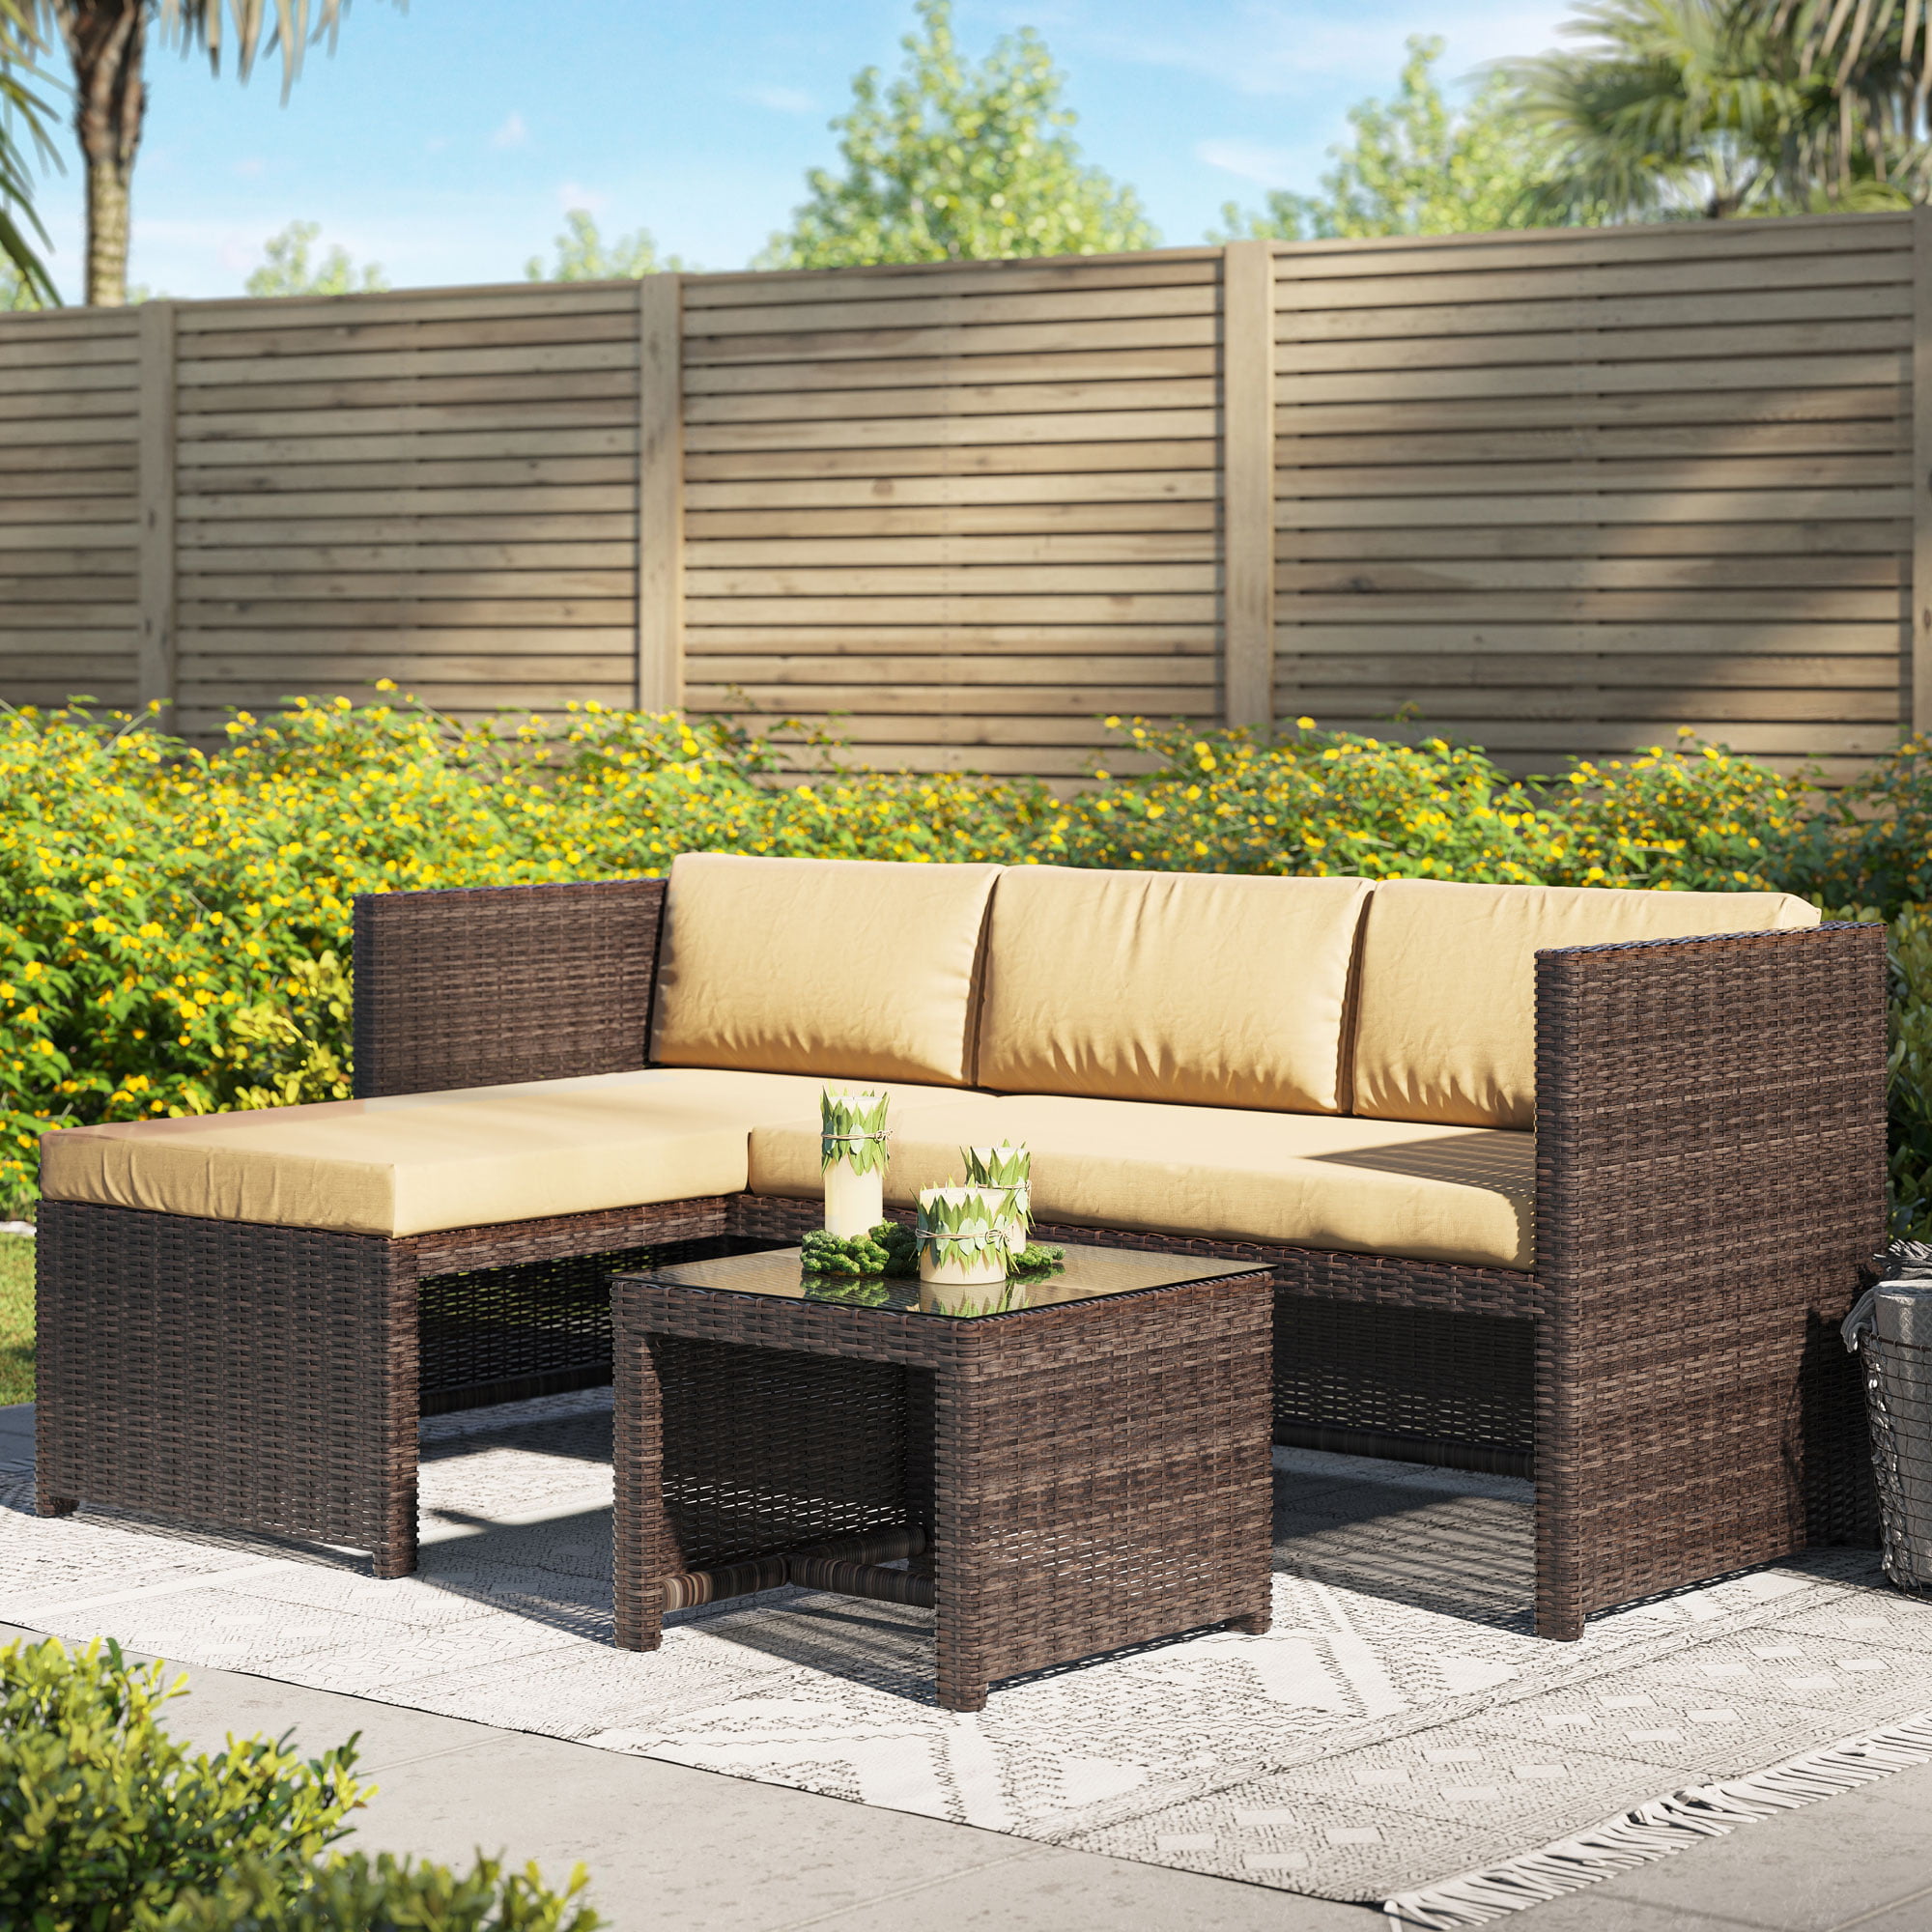 Home Patio Wicker Furniture Outdoor 3-5 Pcs Rattan Sofa Garden Conversation Set 